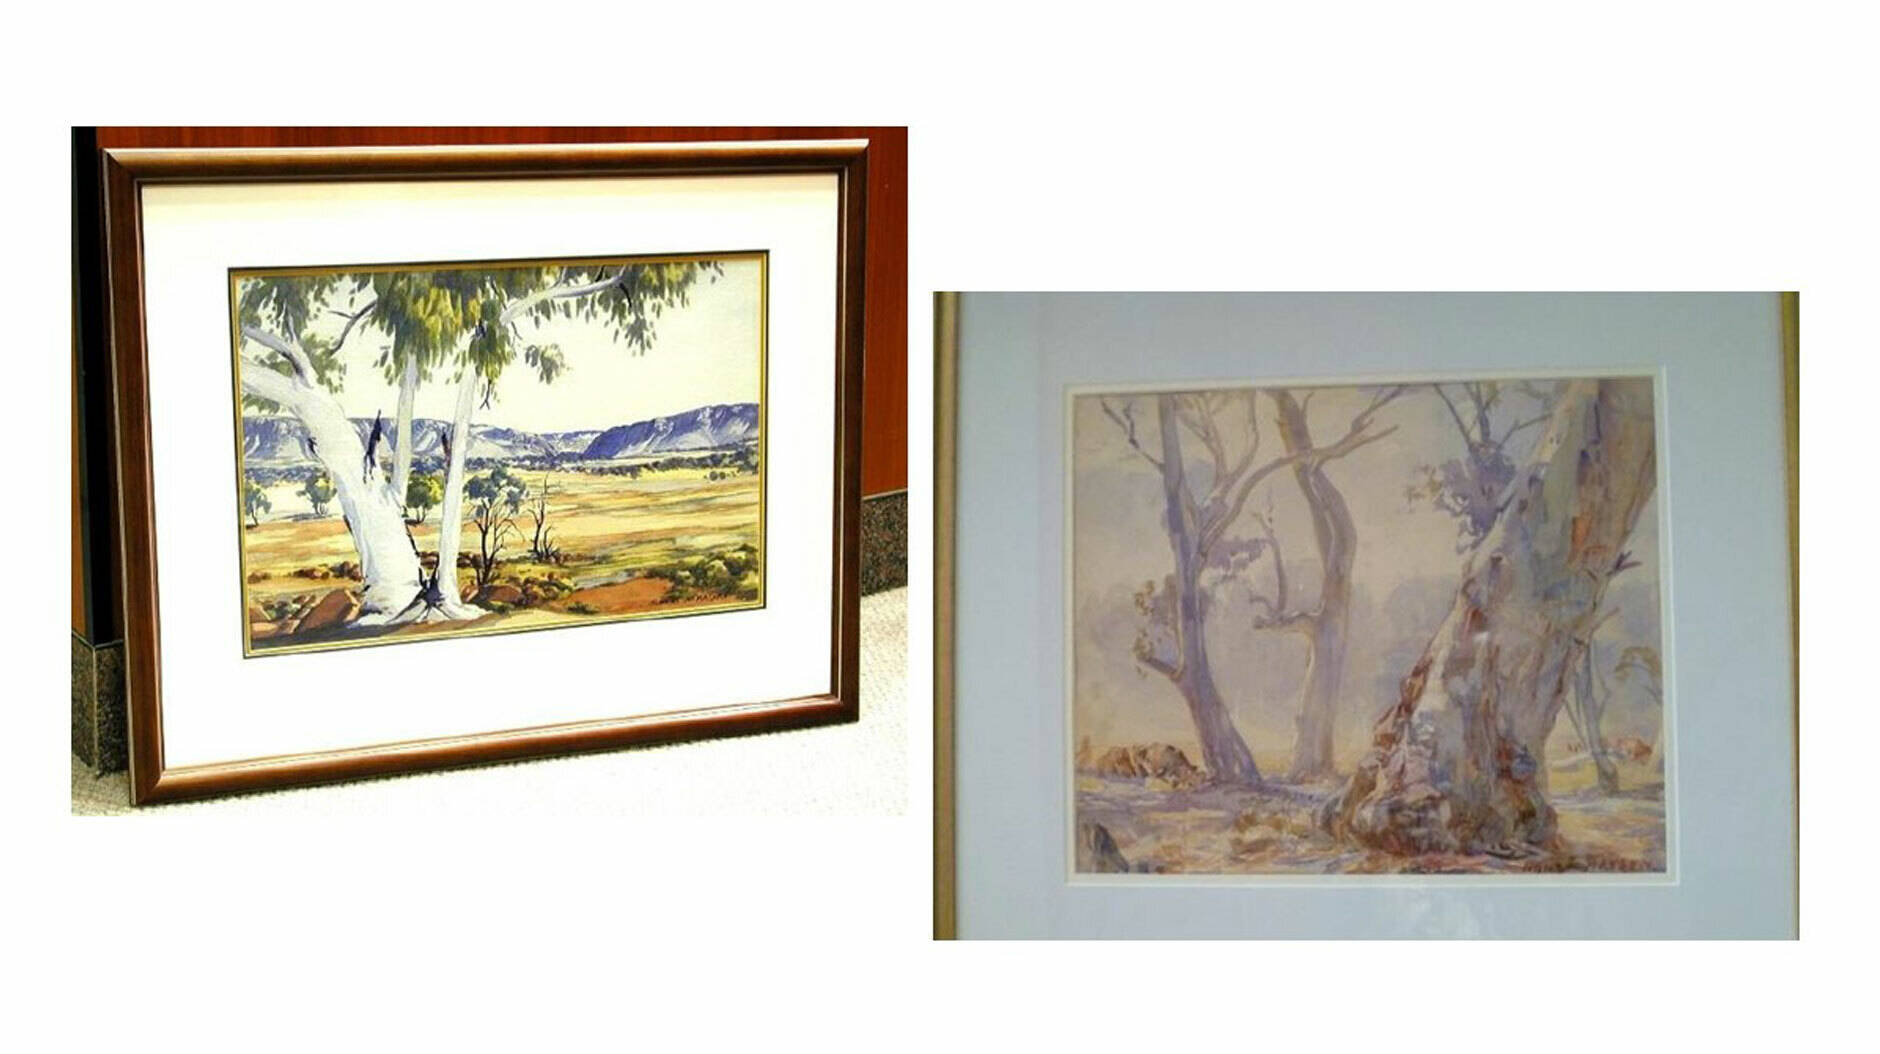 Image Photo  Albert Namatjira  McDonnell Ranges at Heavitree Gap (left) and Hans Heysen  Summer Light (right).